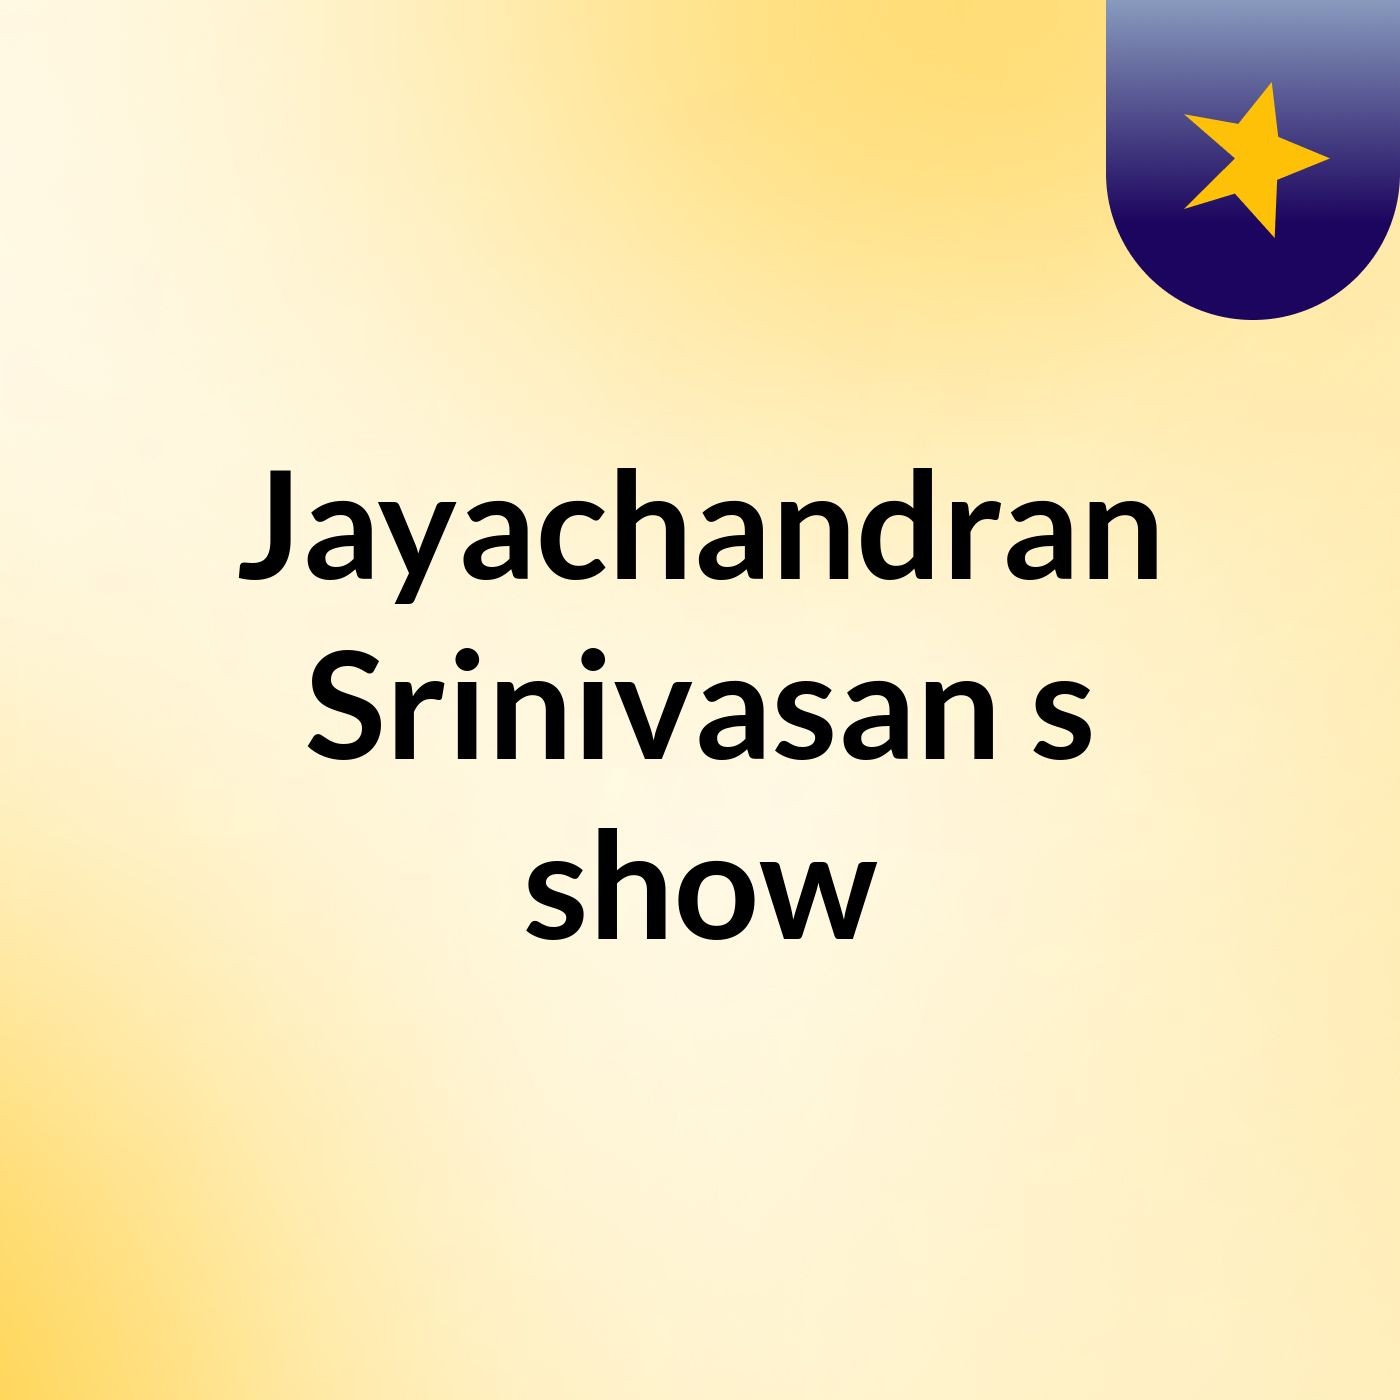 Episode 3 - Jayachandran Srinivasan's show